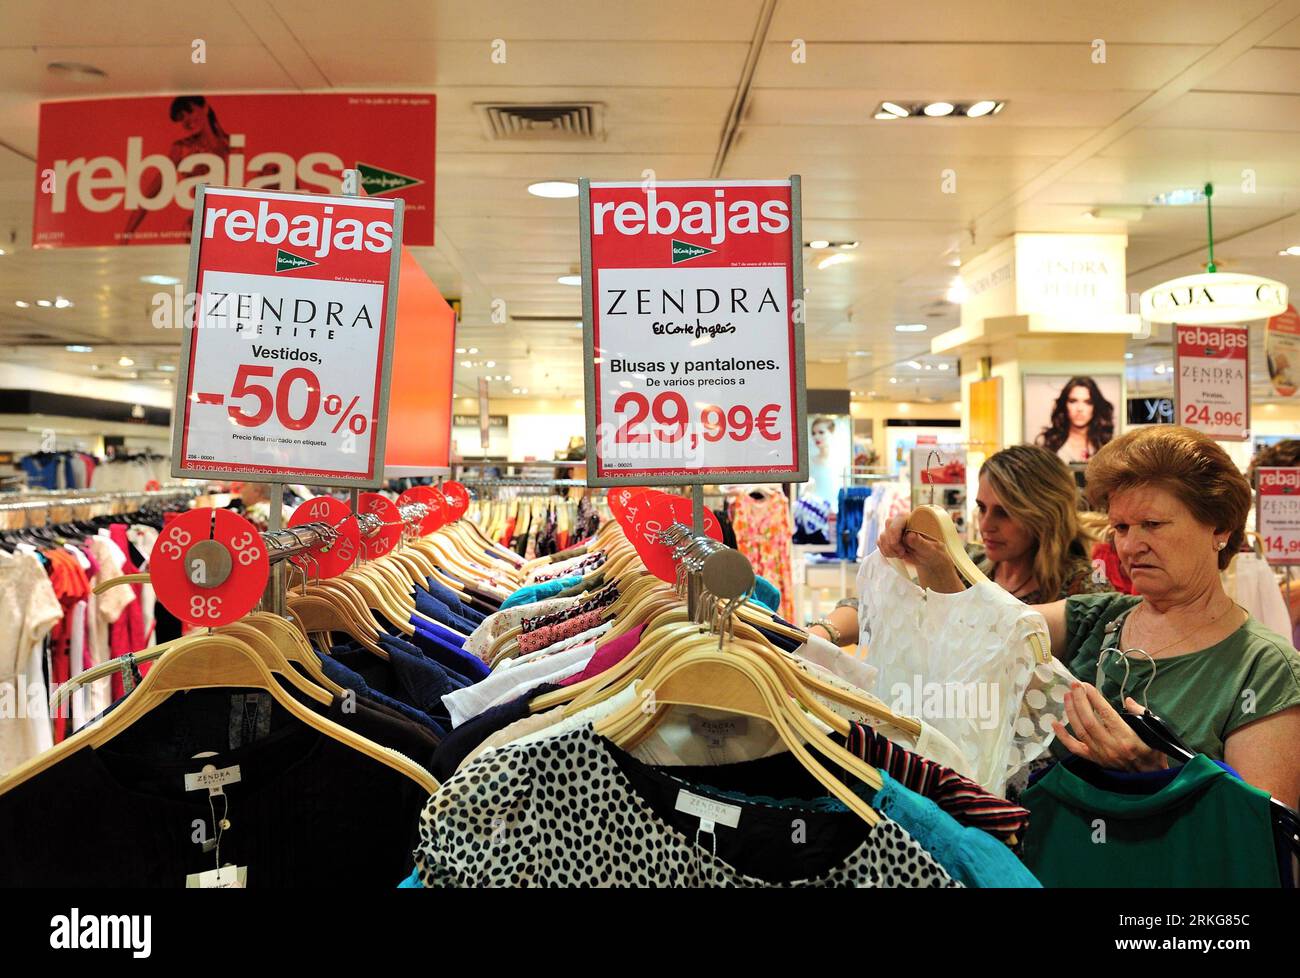 Bildnummer: 55563427  Datum: 01.07.2011  Copyright: imago/Xinhua (110701) -- MADRID, July 1, 2011 (Xinhua) -- Consumers select articles in a shopping centre in Madrid, Spain, on July 1, 2011, the first day of Spain s summer discount season this year. The season will last till late August. (Xinhua/Chen Haitong) (zl) SPAIN-MADRID-SUMMER DISCOUNT SEASON PUBLICATIONxNOTxINxCHN Wirtschaft Gesellschaft Schlussverkauf Sommerschlussverkauf Rabatte Einzelhandel xns x0x 2011 quer premiumd     Bildnummer 55563427 Date 01 07 2011 Copyright Imago XINHUA  Madrid July 1 2011 XINHUA Consumers Select Articles Stock Photo